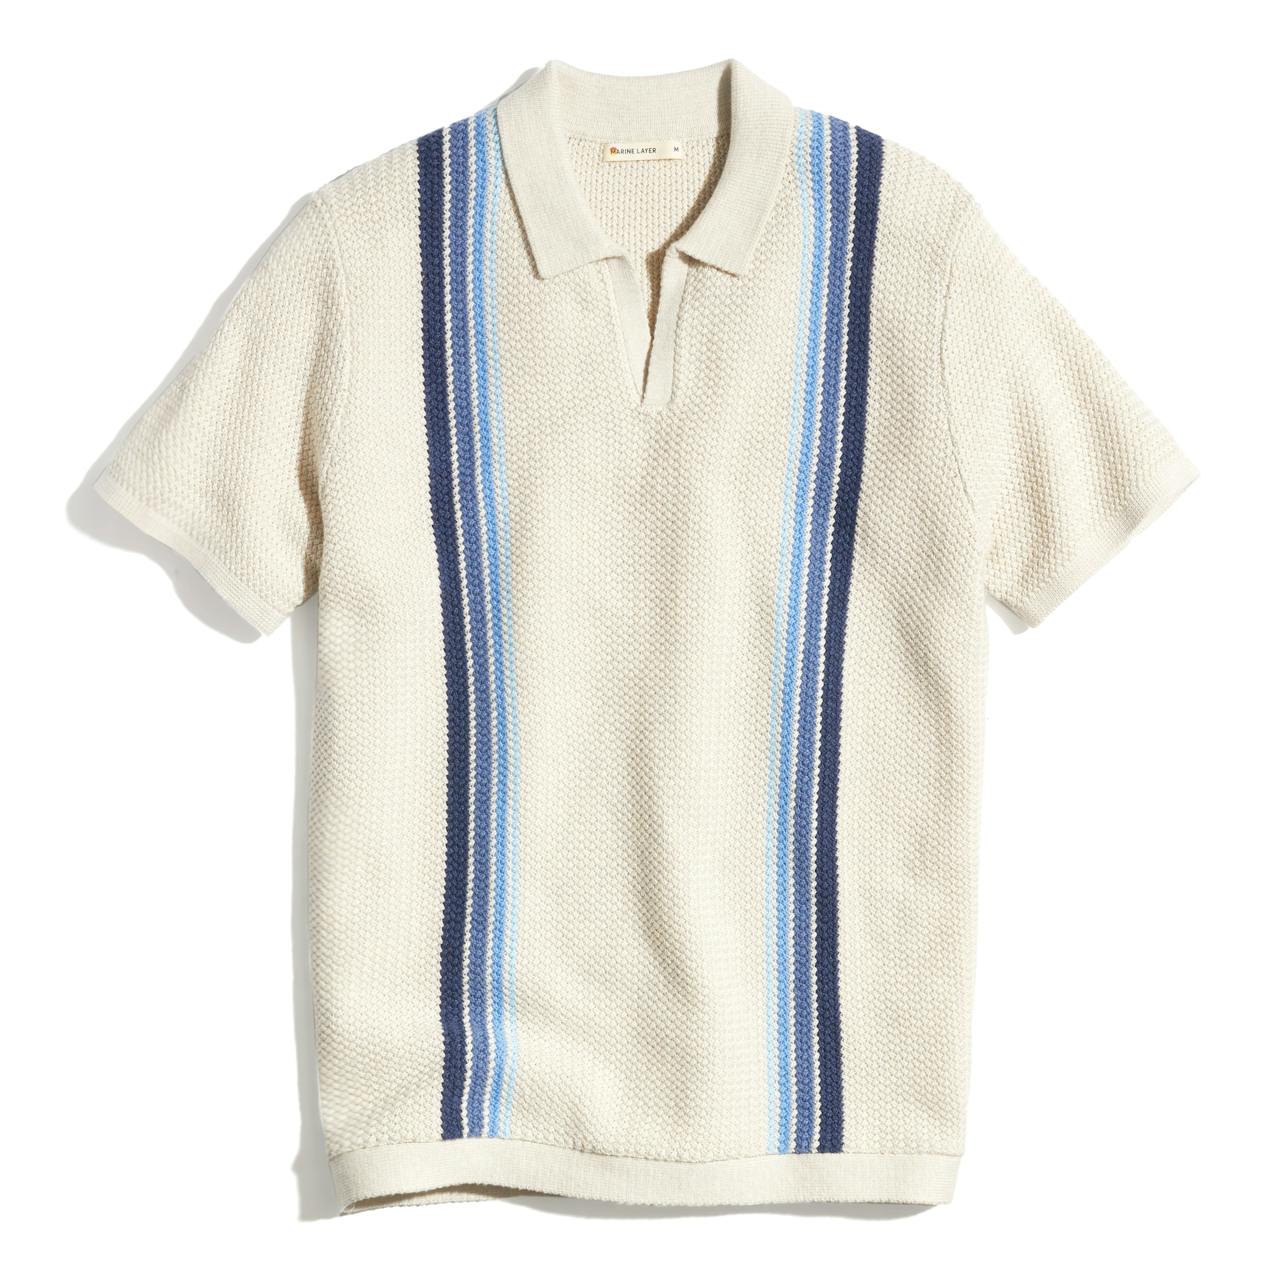 MARINE LAYER - Conrad Sweater Polo in Oatmeal Blue Stripe - $118